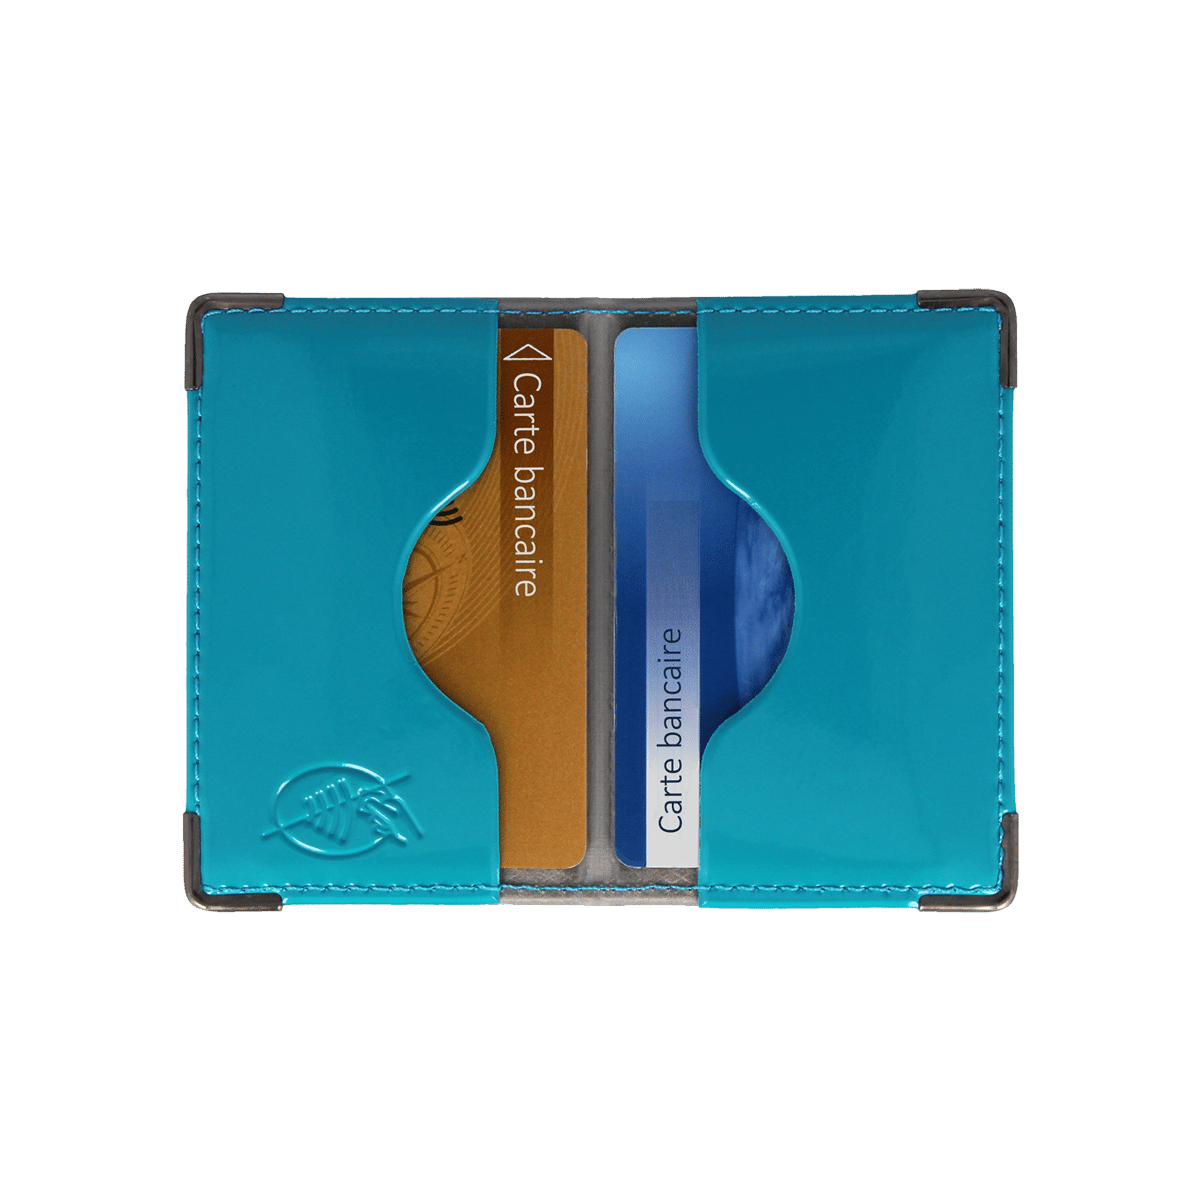 Porte Carte RFID Pop Up : Sécurité et Design - Mon Sac Antivol